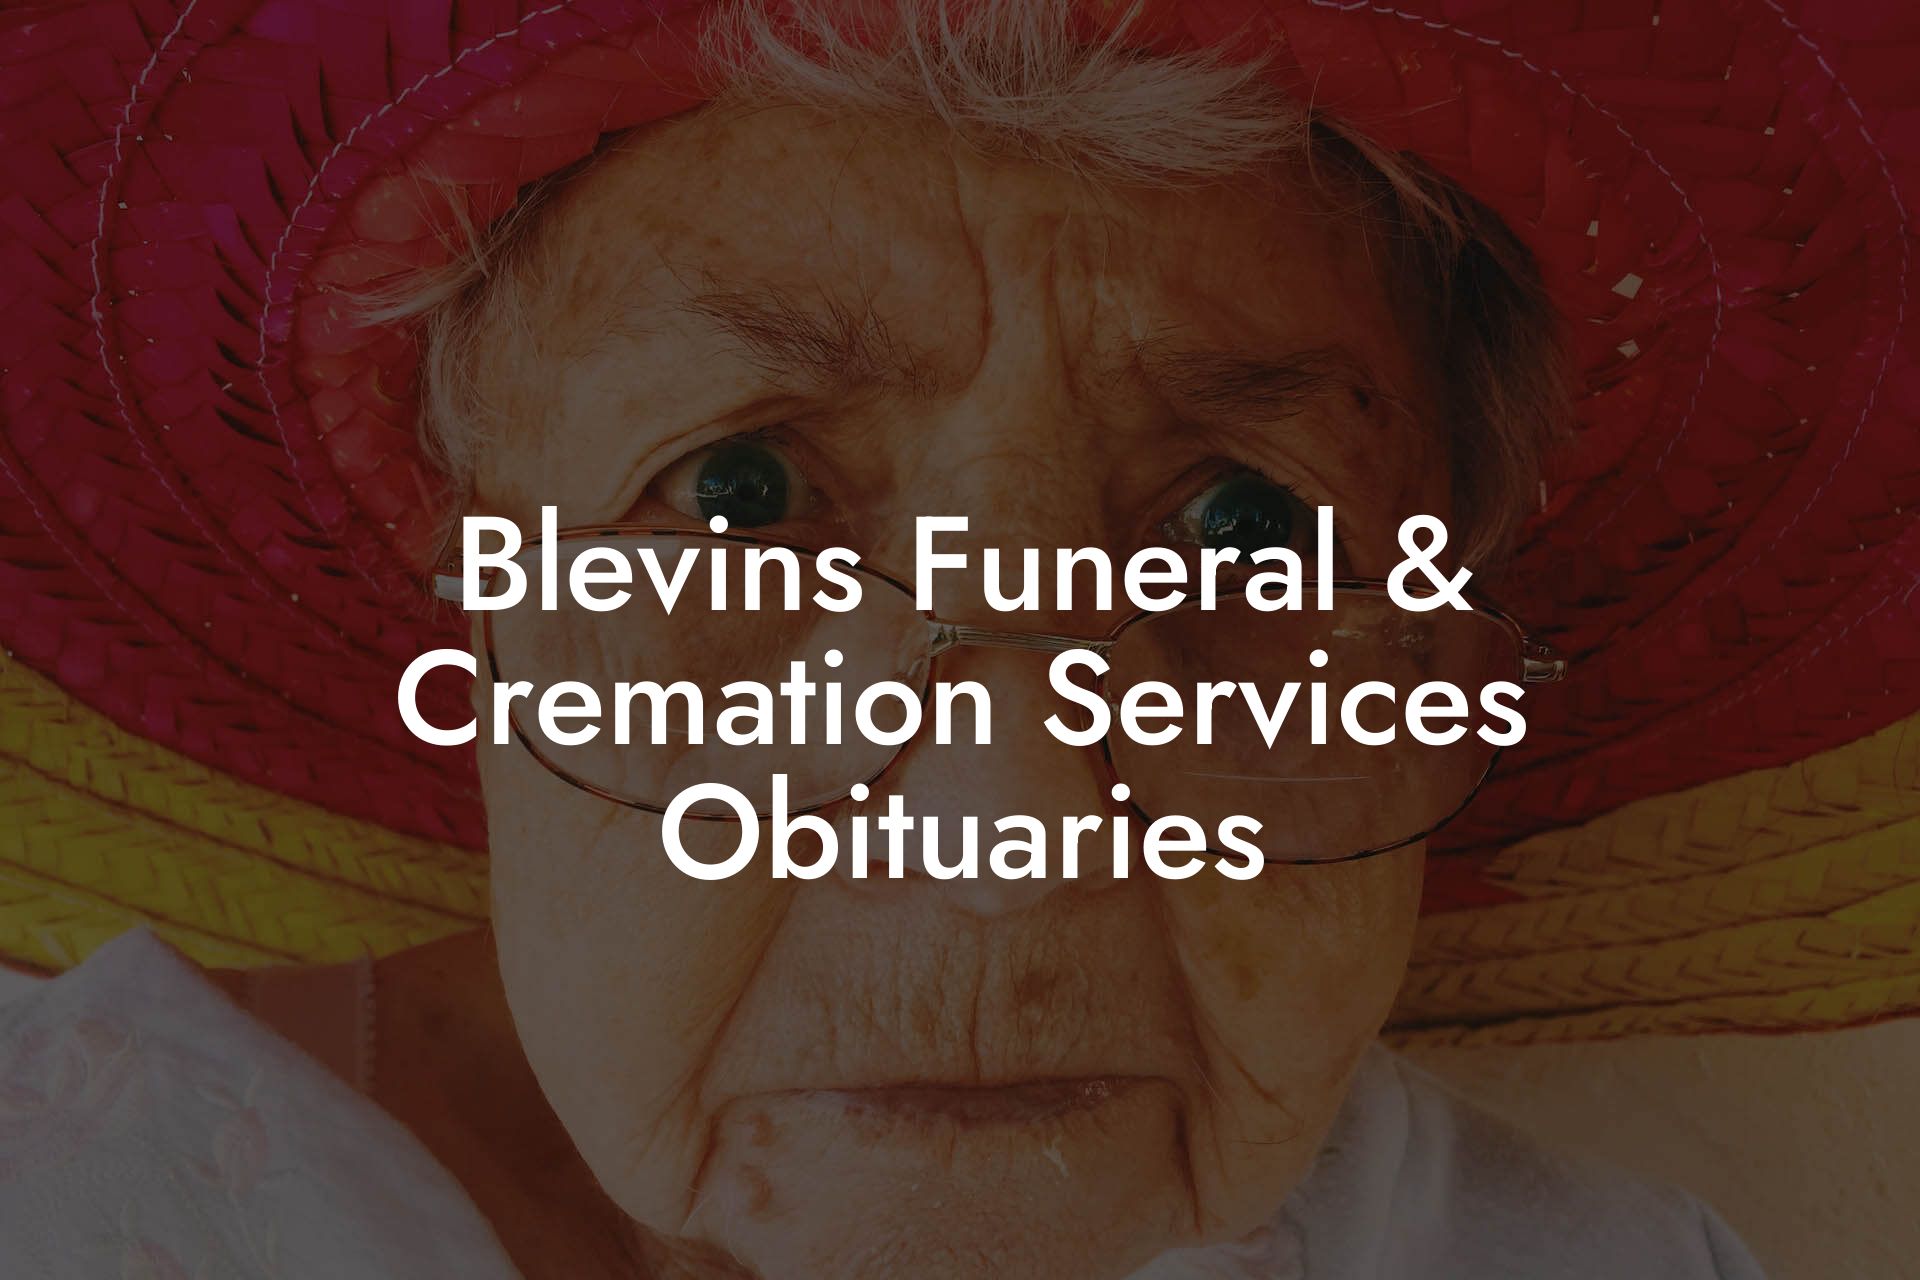 Blevins Funeral & Cremation Services Obituaries